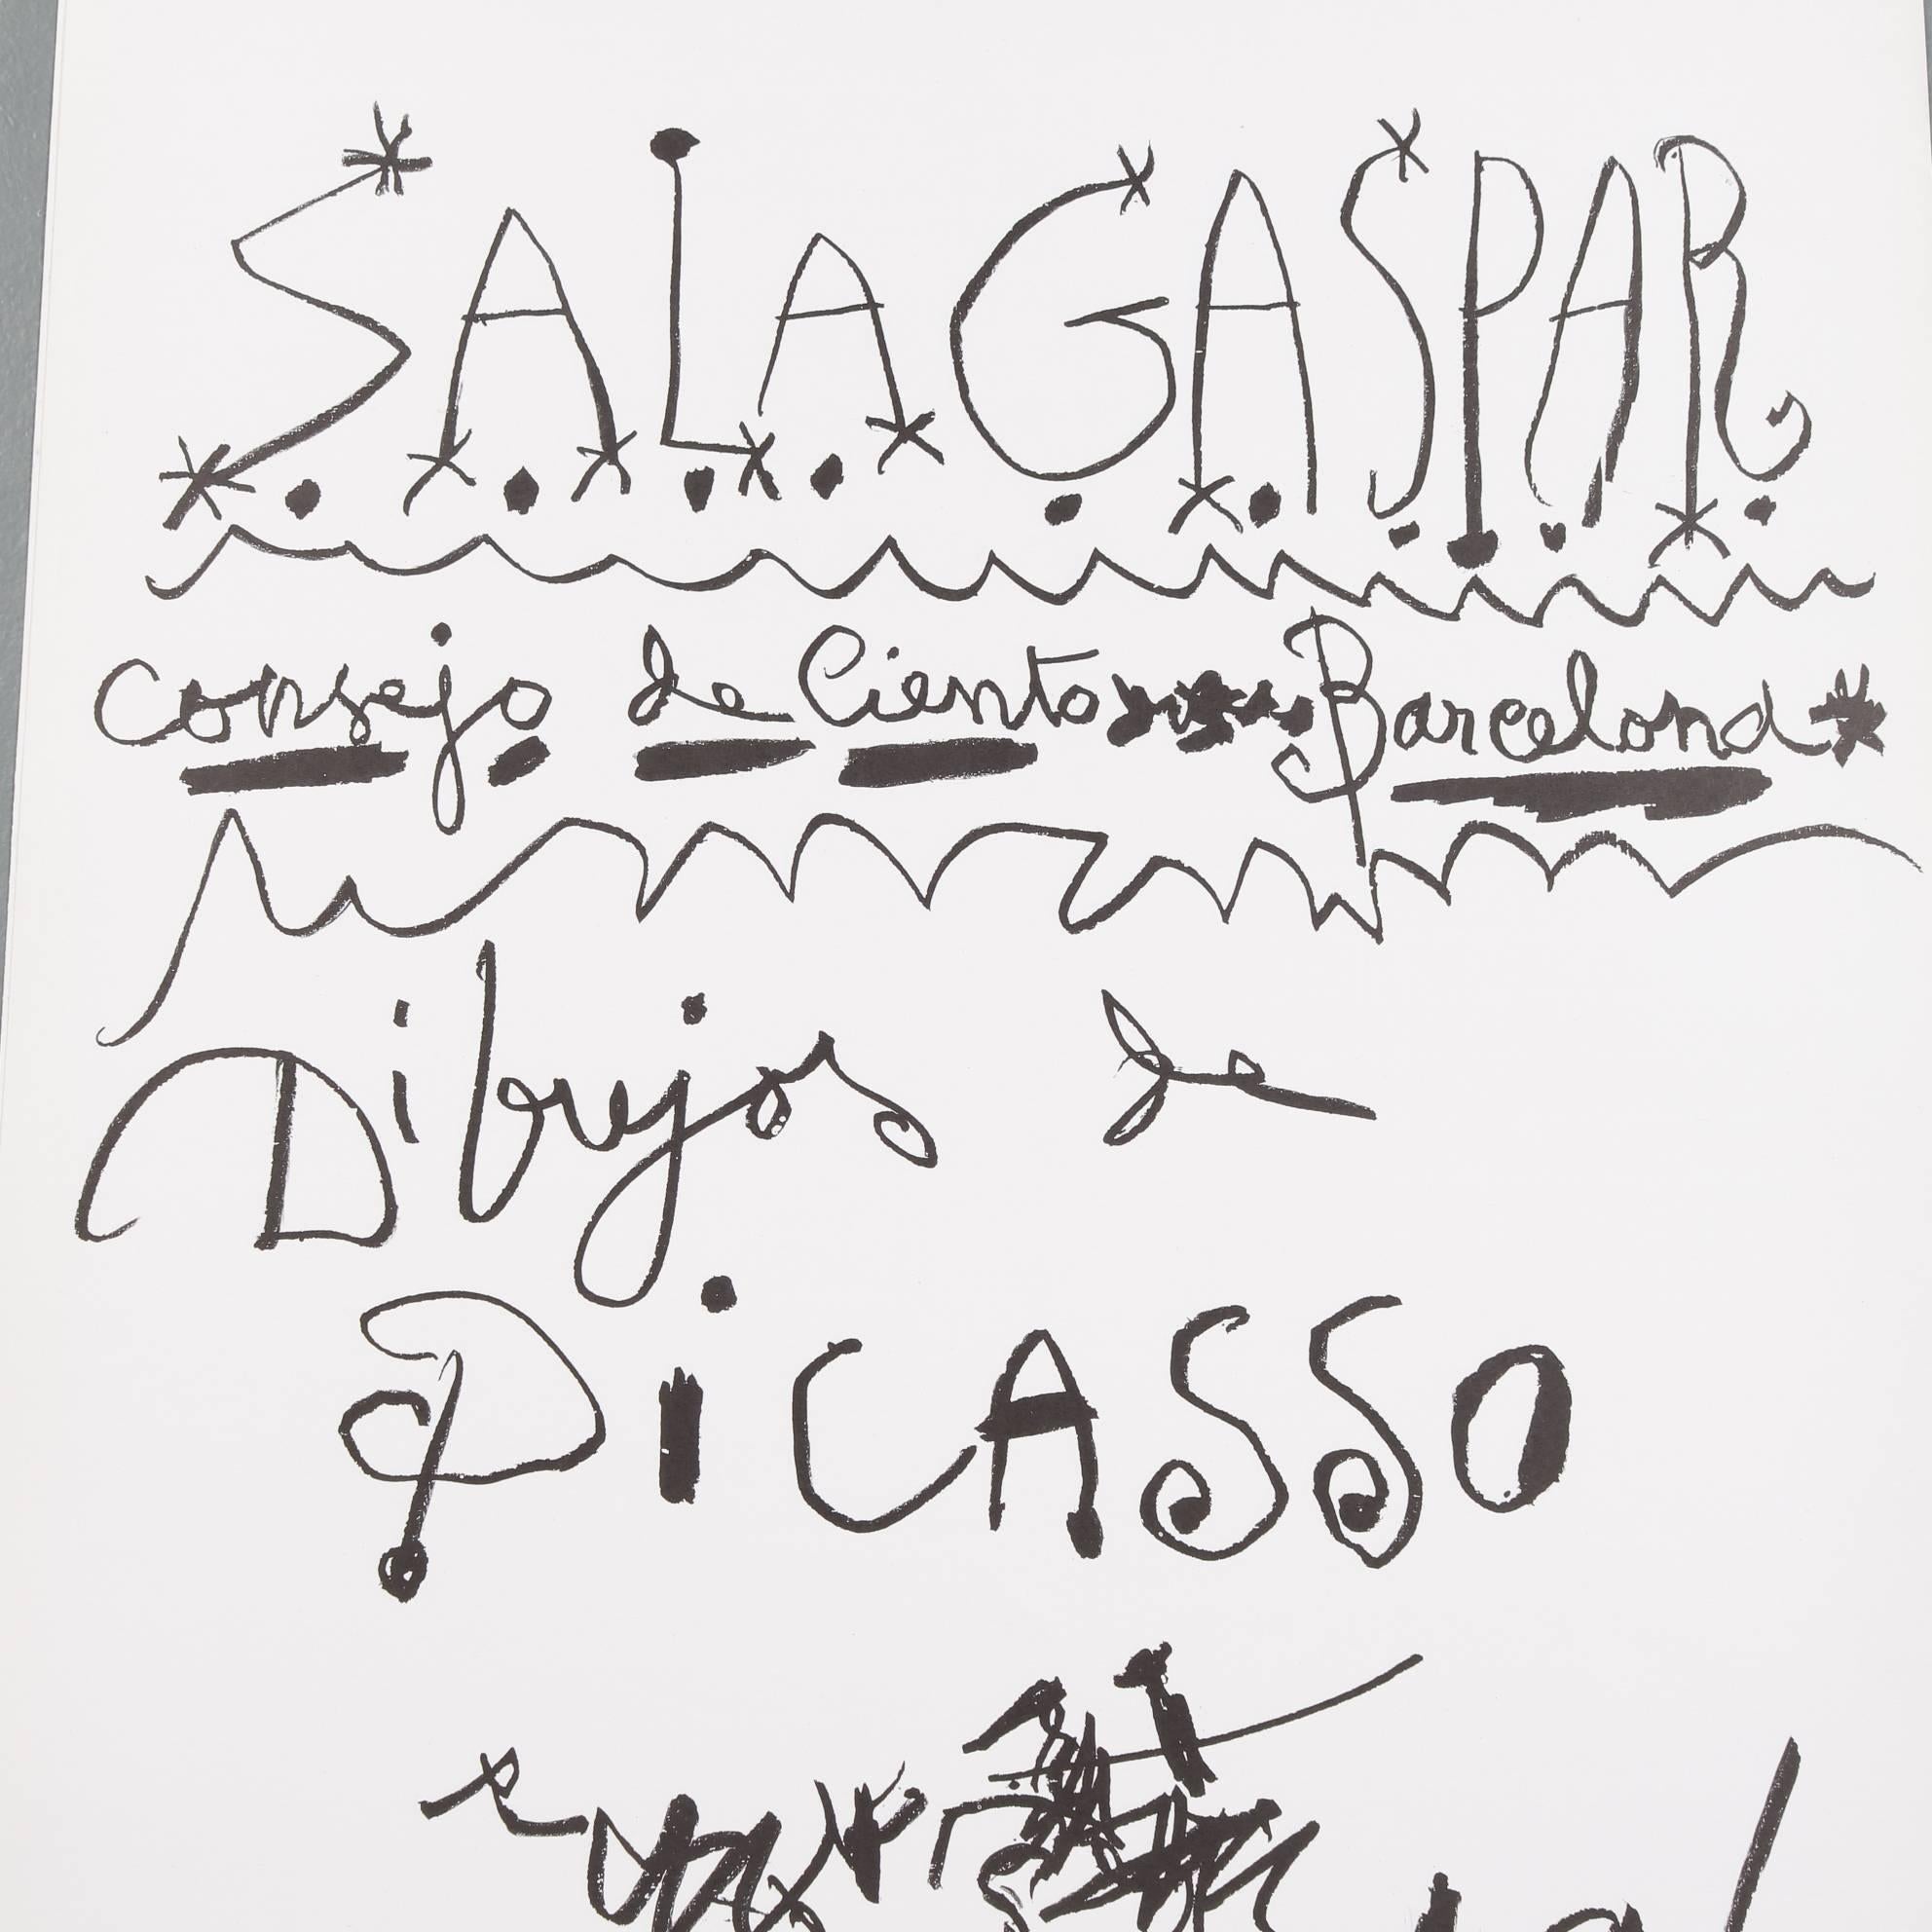 Spanish Original Picasso lithographic poster 